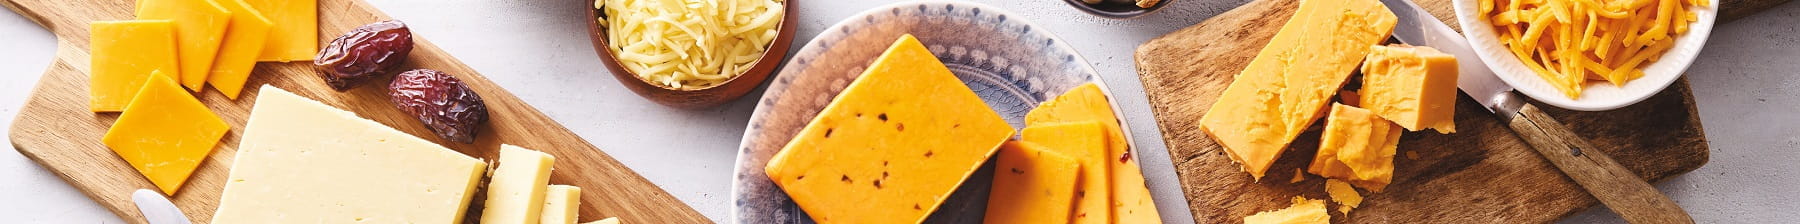 Cheddar cheese range